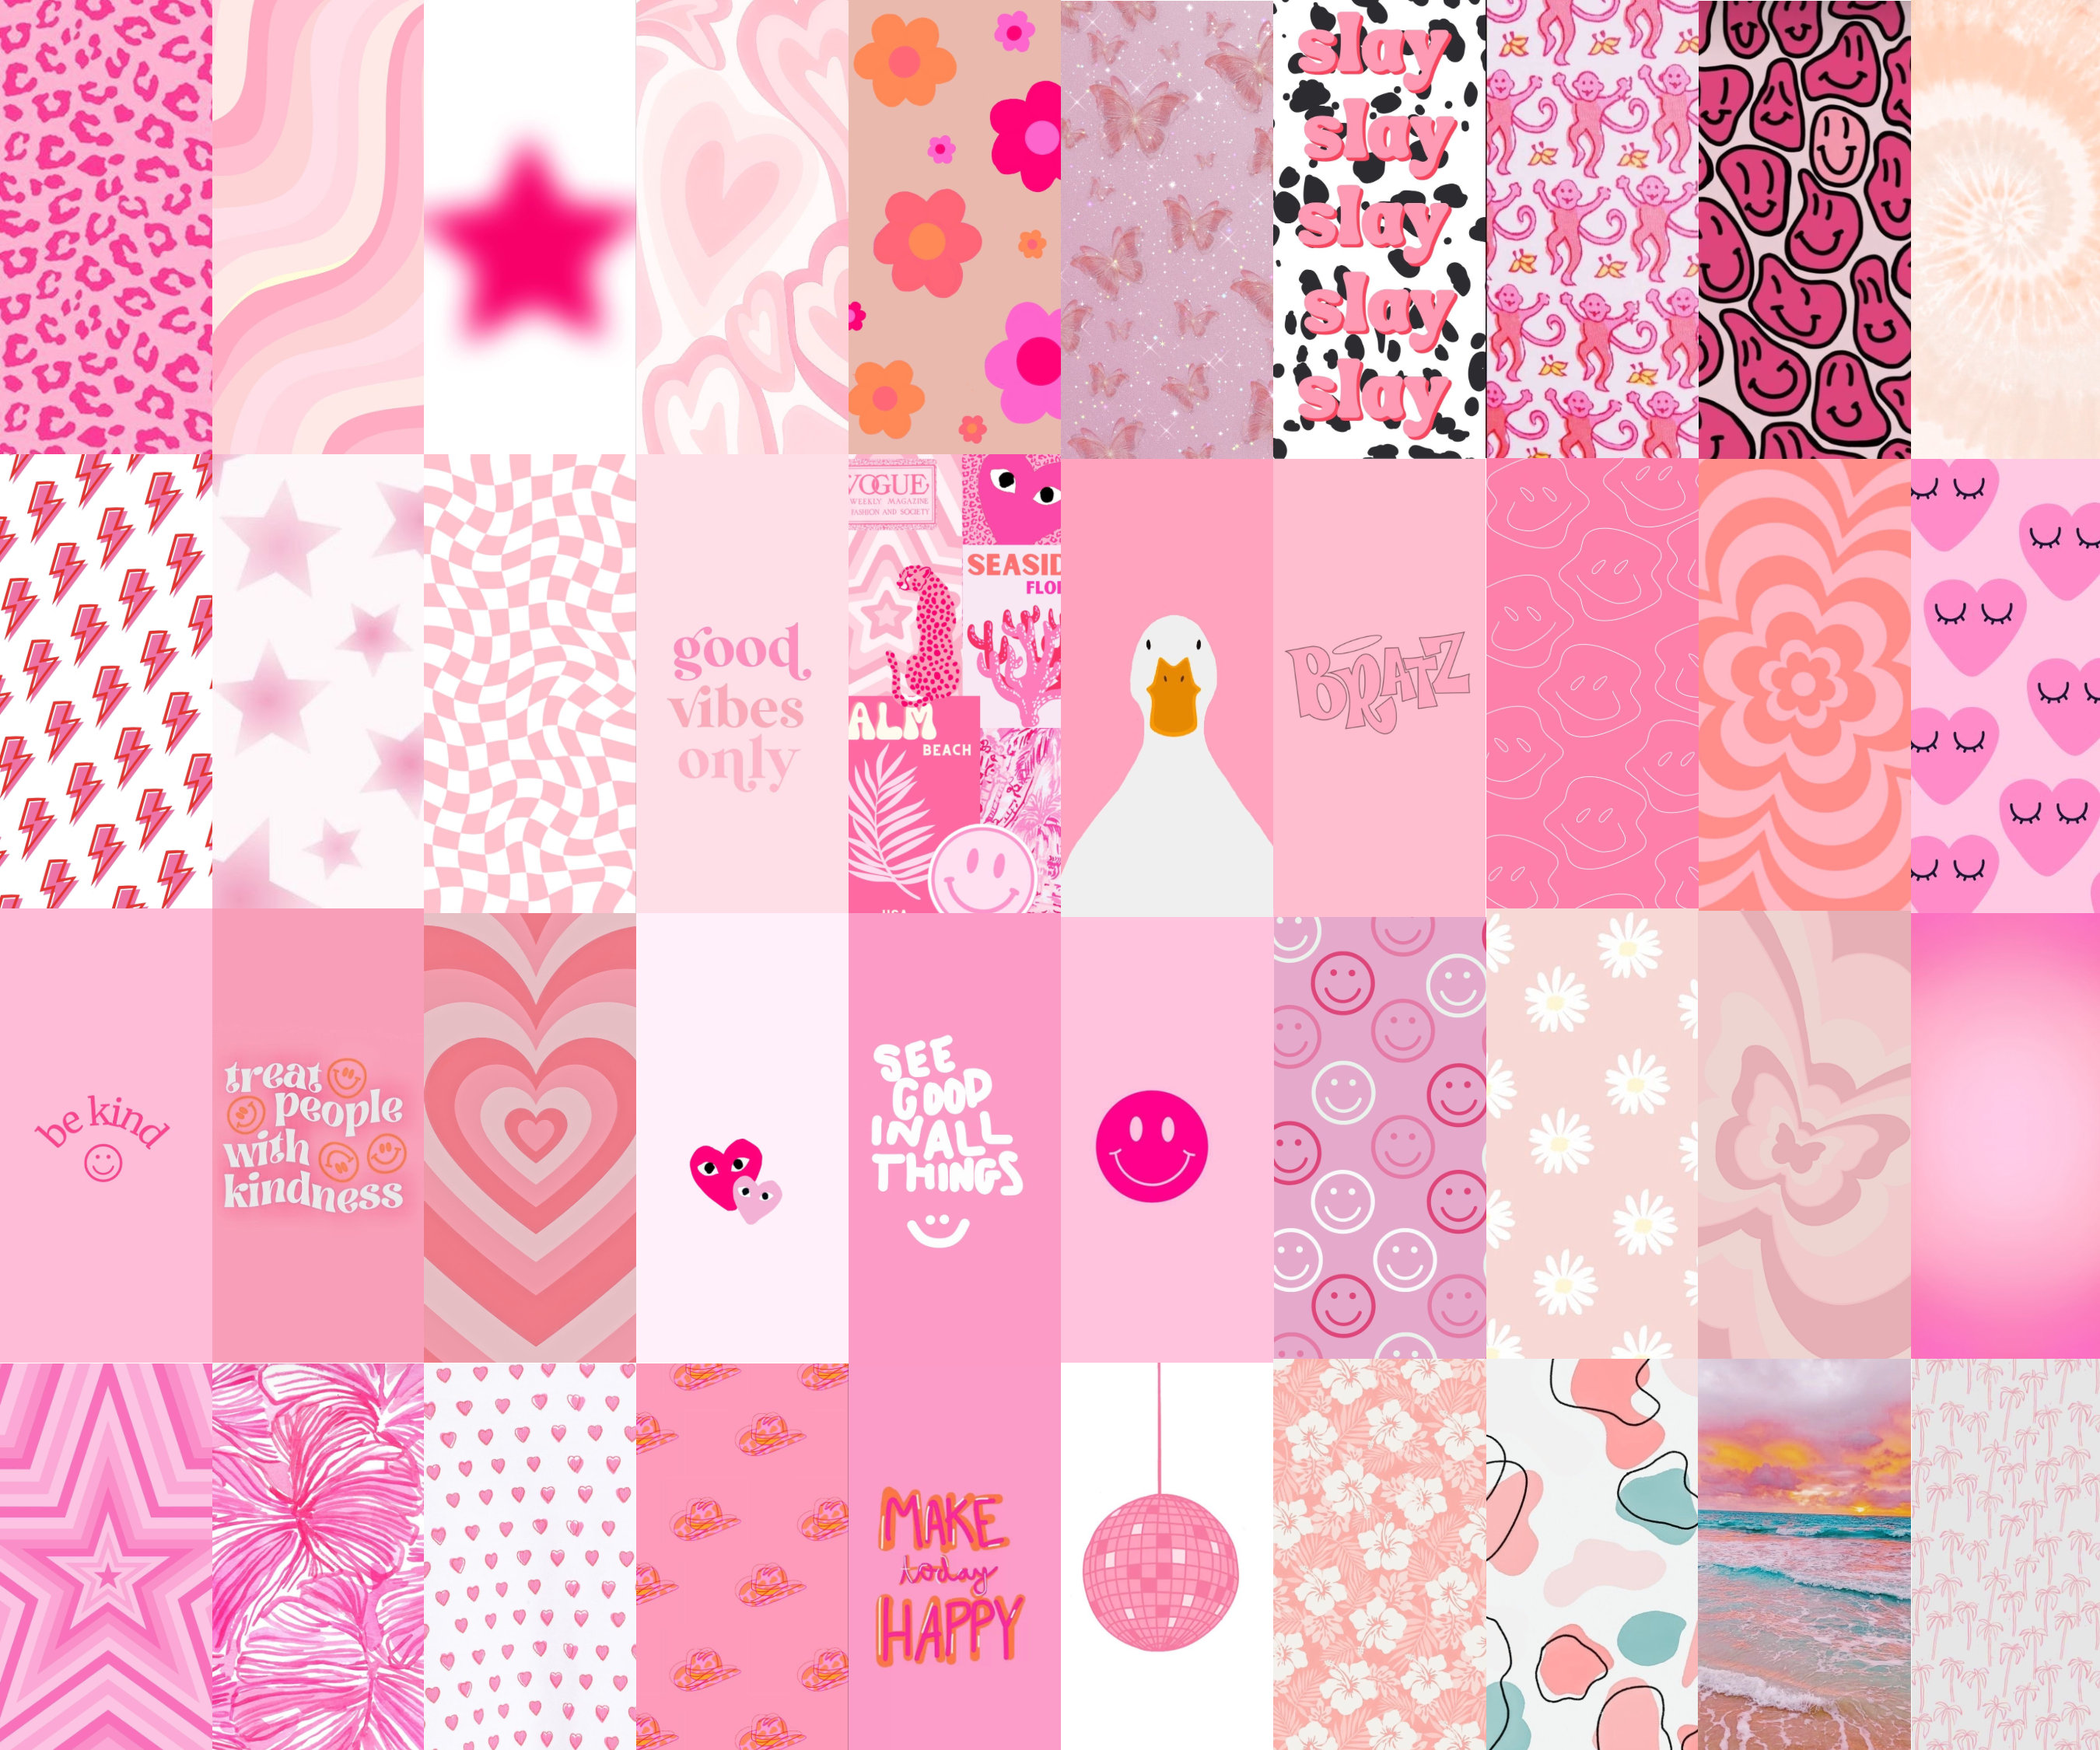 baby pink pattern background